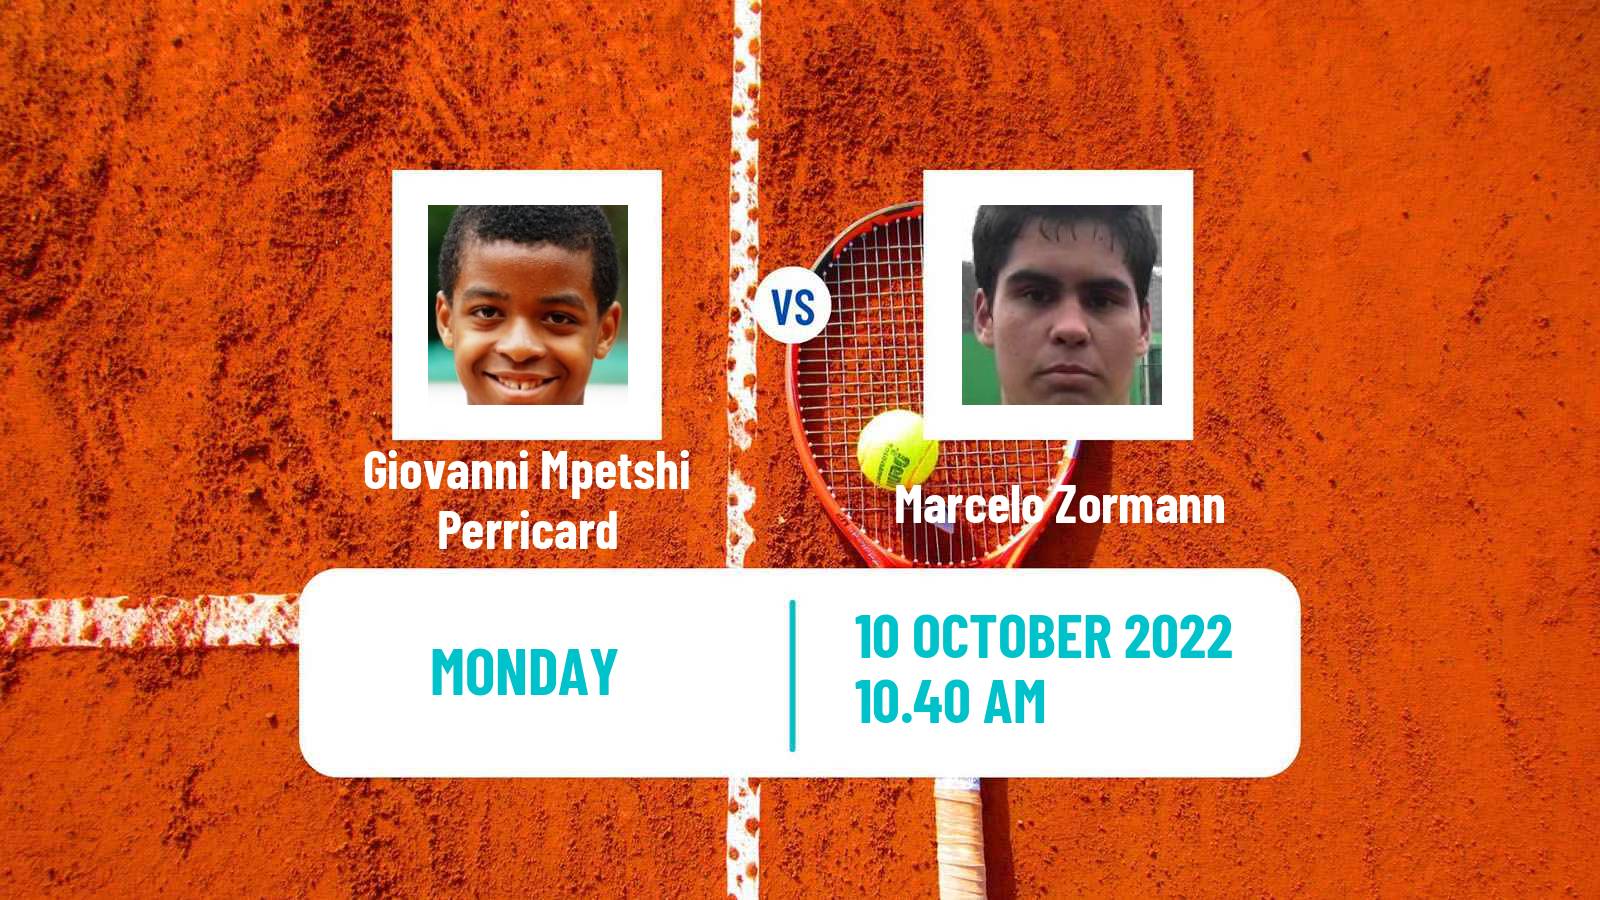 Tennis ATP Challenger Giovanni Mpetshi Perricard - Marcelo Zormann